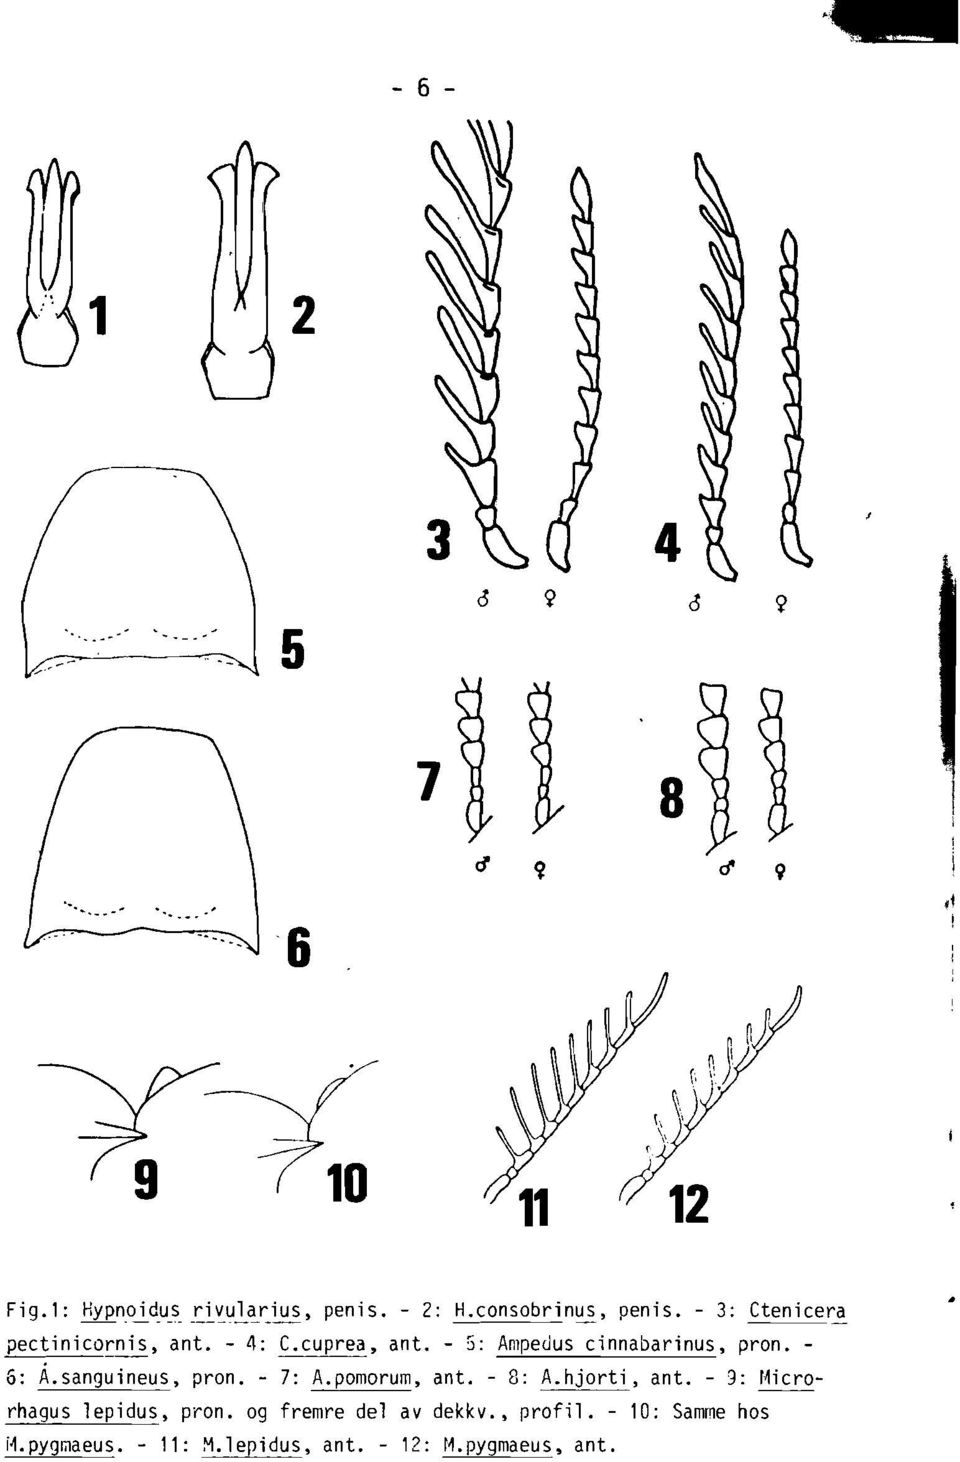 - 5: Ampedus cinnabarinus, pron. 6: A.sanguineus, pron. - 7: A.pomorum, ant. - 8: A.hjorti, ant.